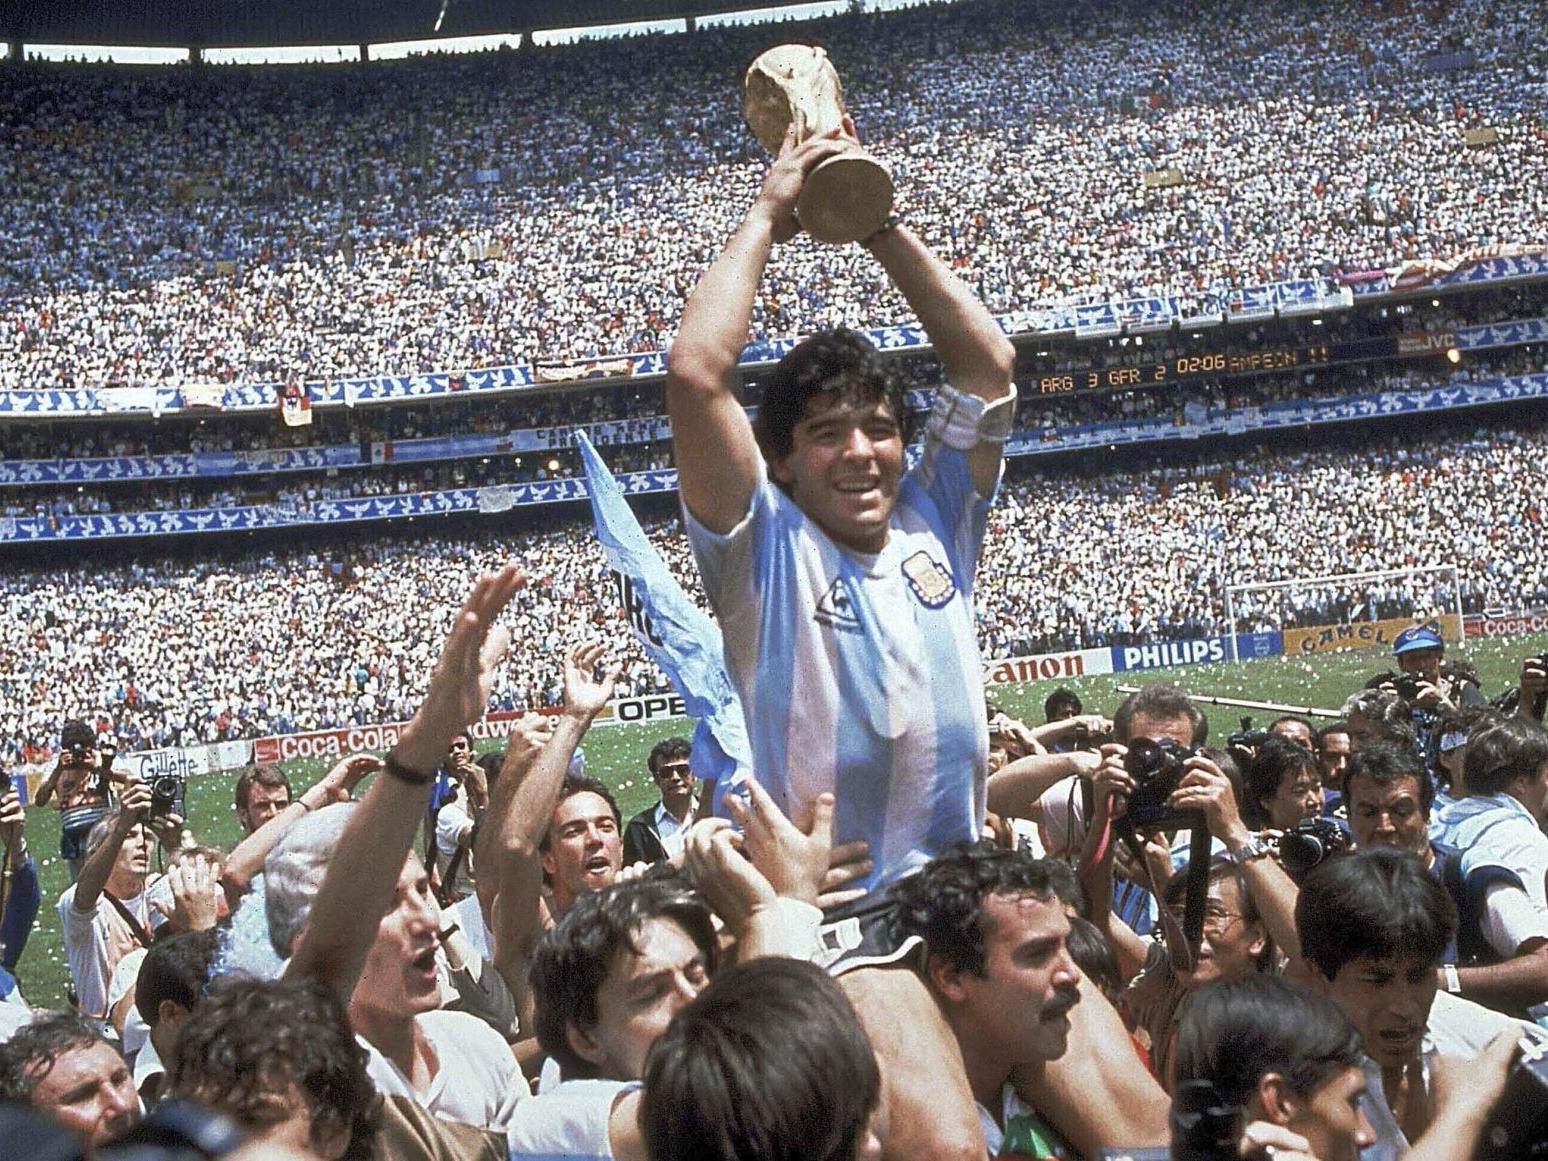 AP PHOTOS: Maradona a genius on the field, a character off